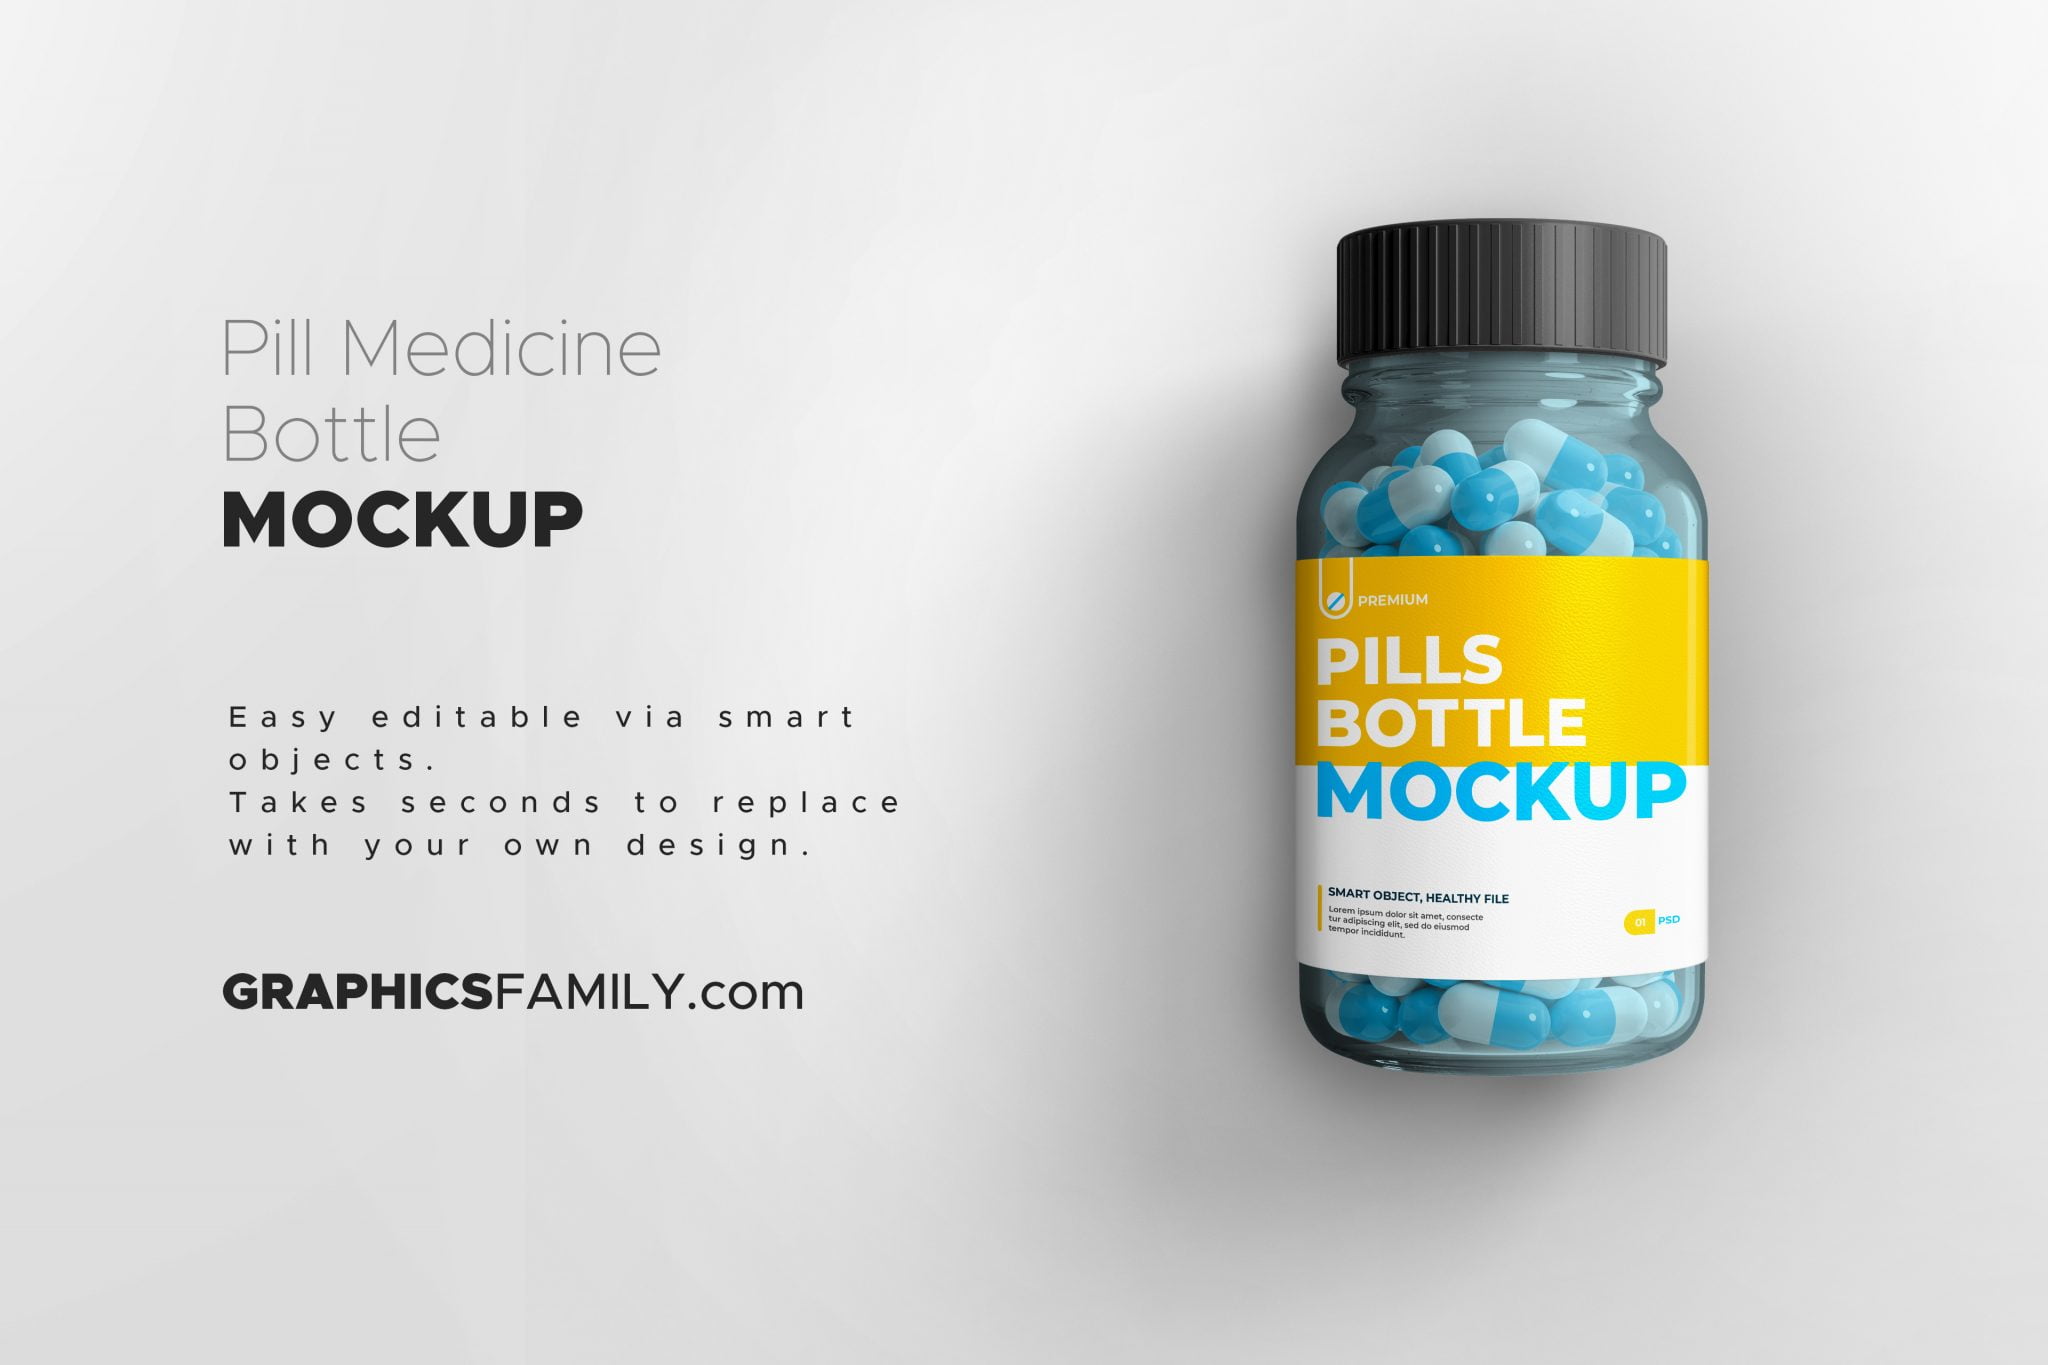 Pill Medicine Bottle Mockup GraphicsFamily